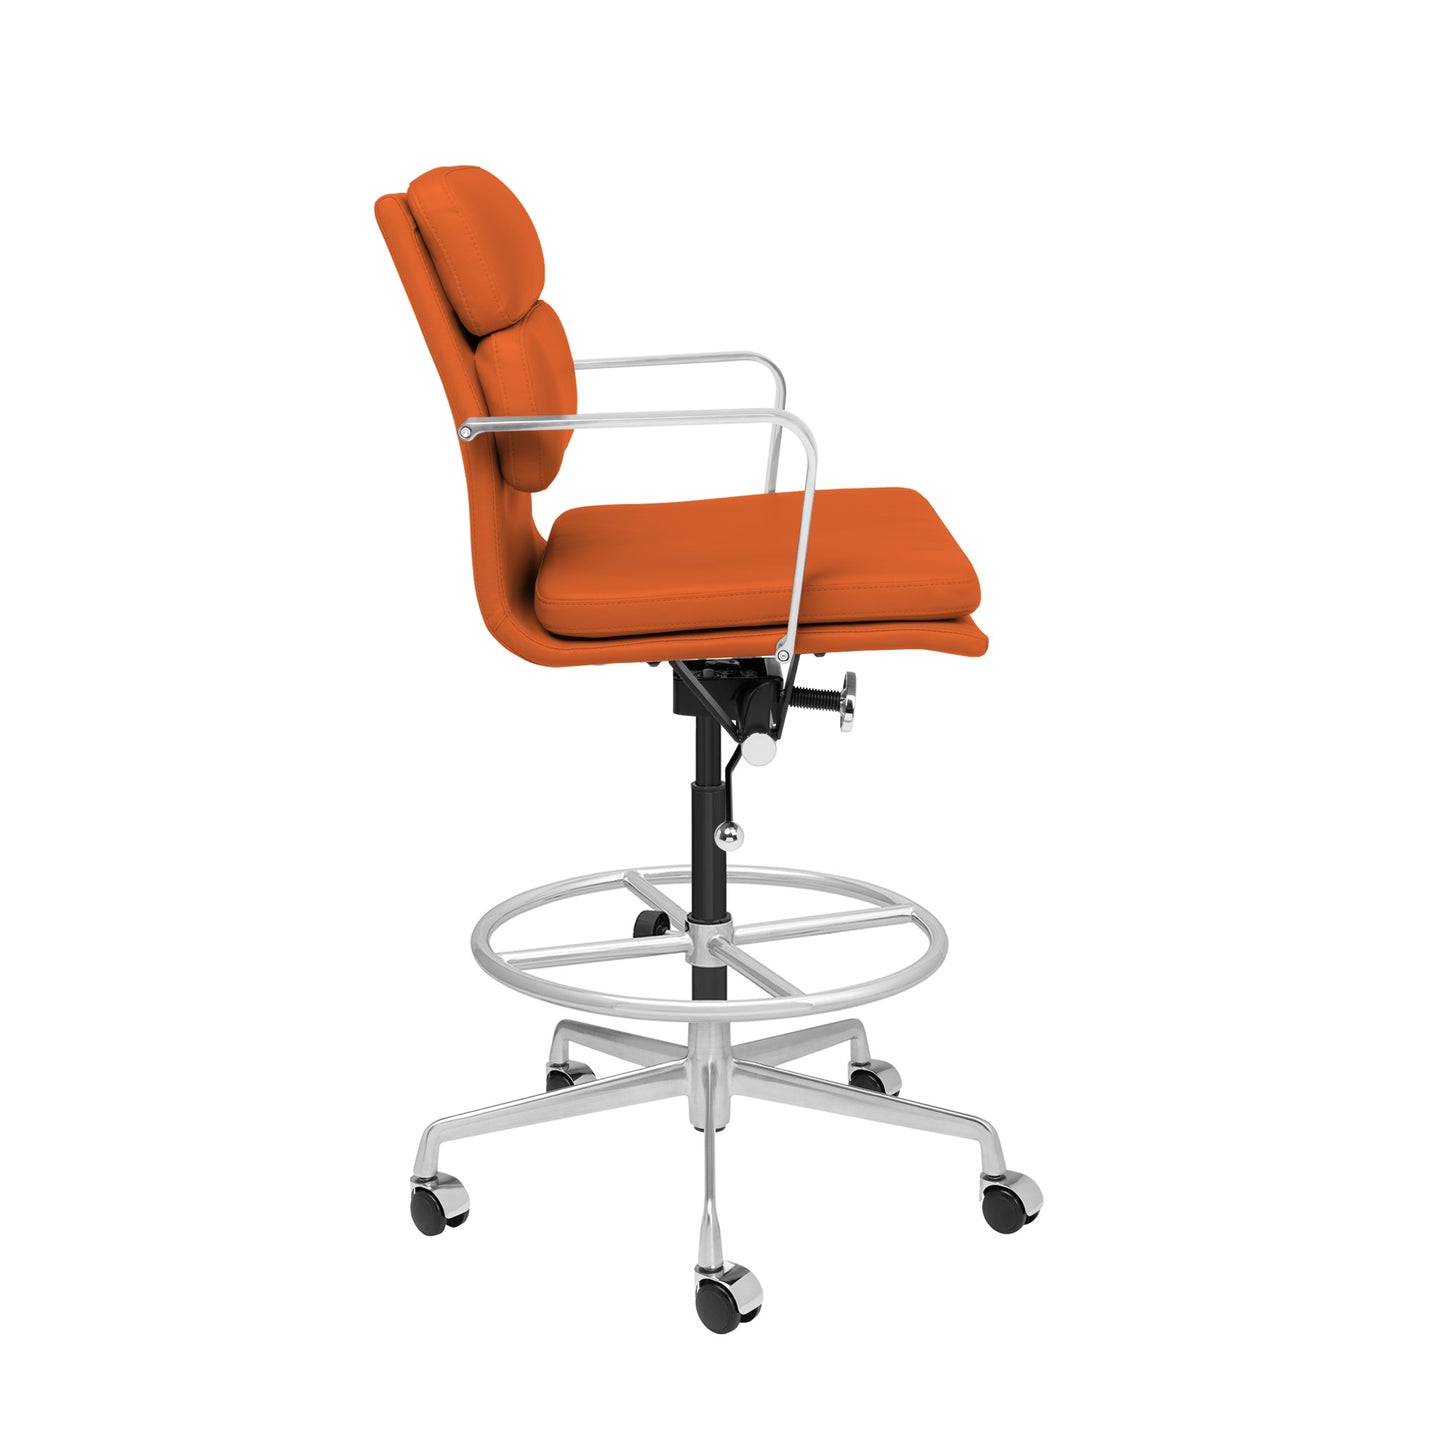 SHIPS MAY 17TH - SOHO II Padded Drafting Chair (Orange)